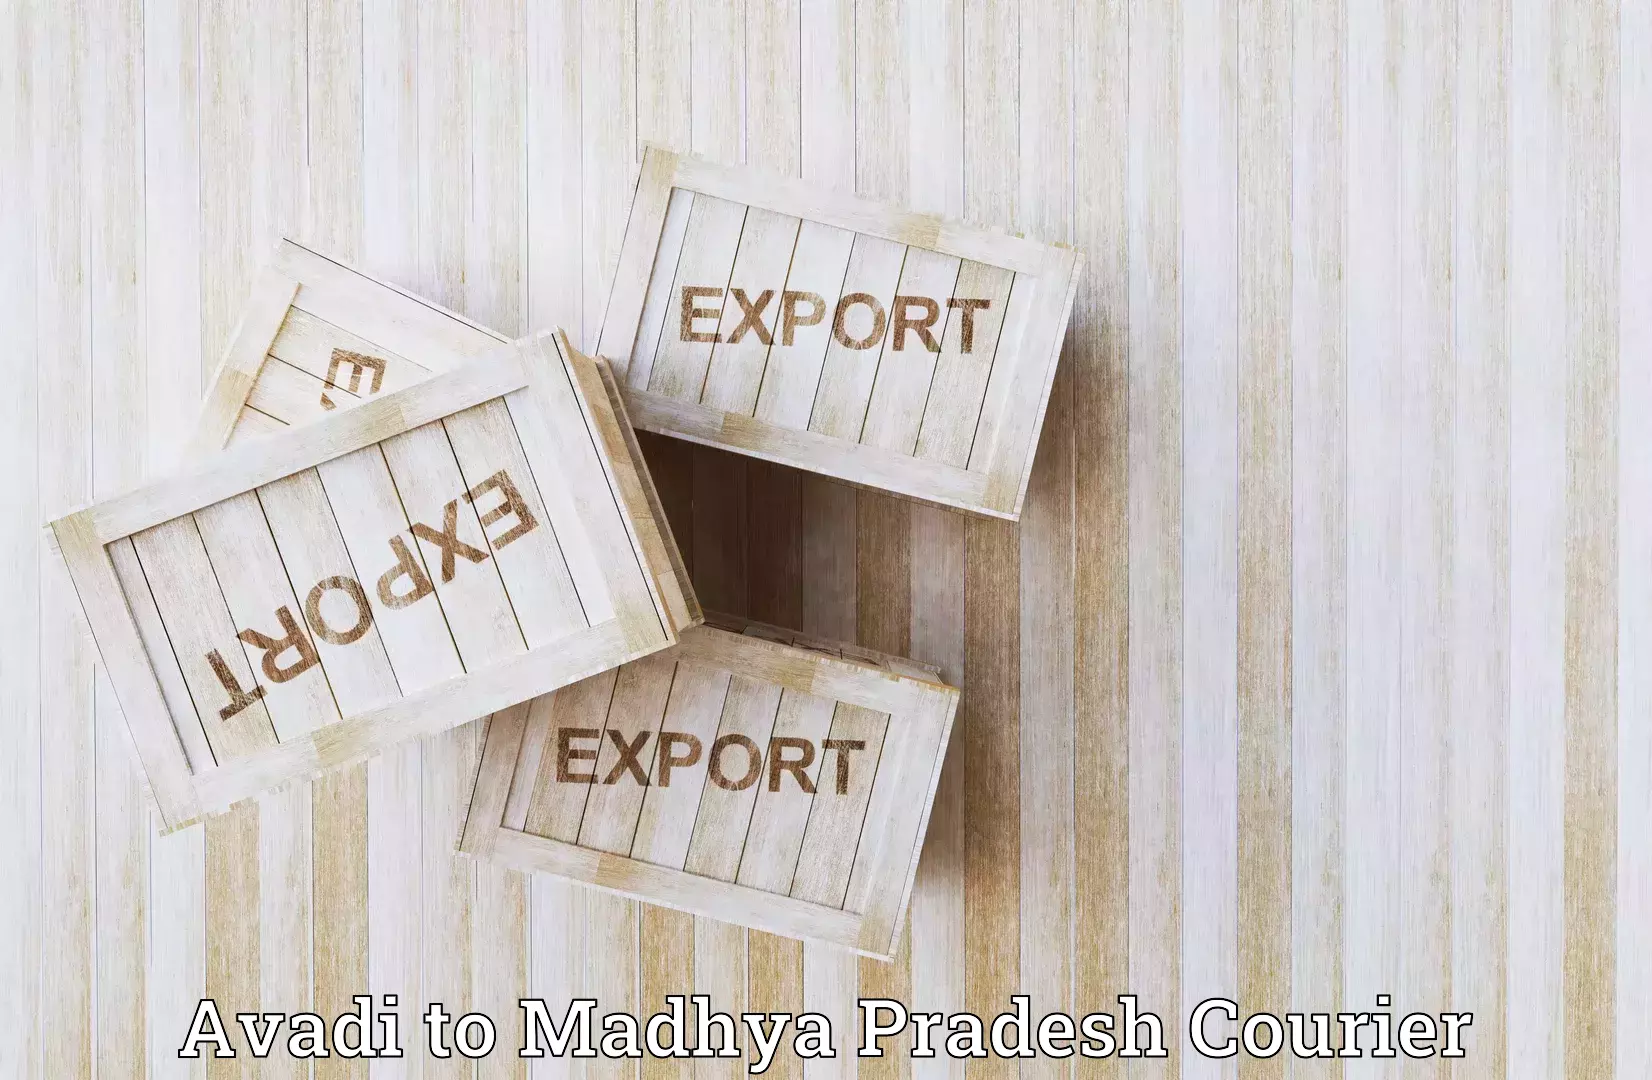 Express delivery capabilities Avadi to Mandideep